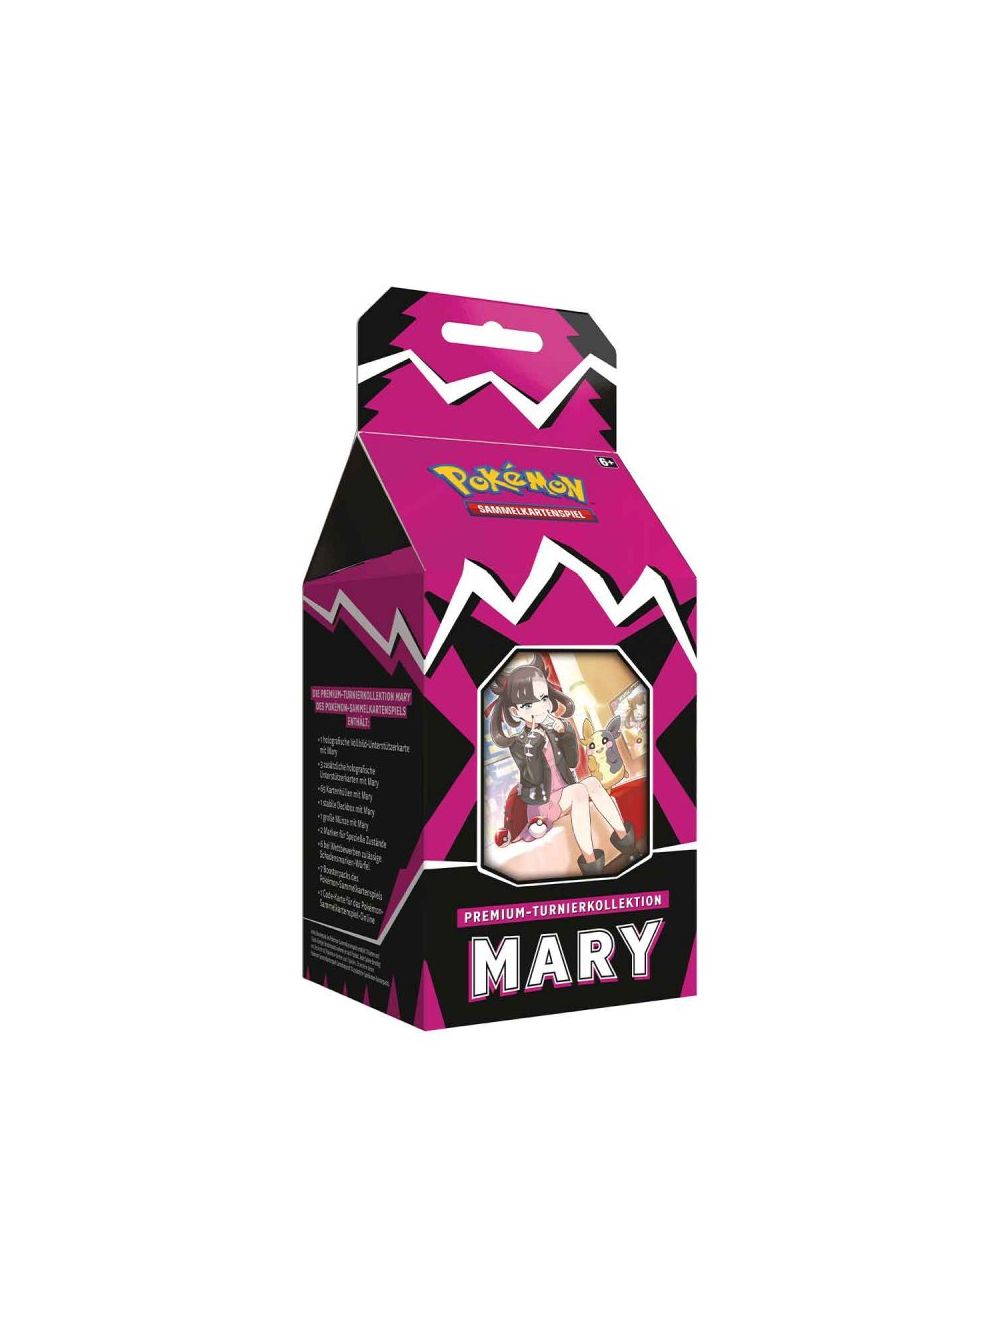 Mary Premium-Turnierkollektion